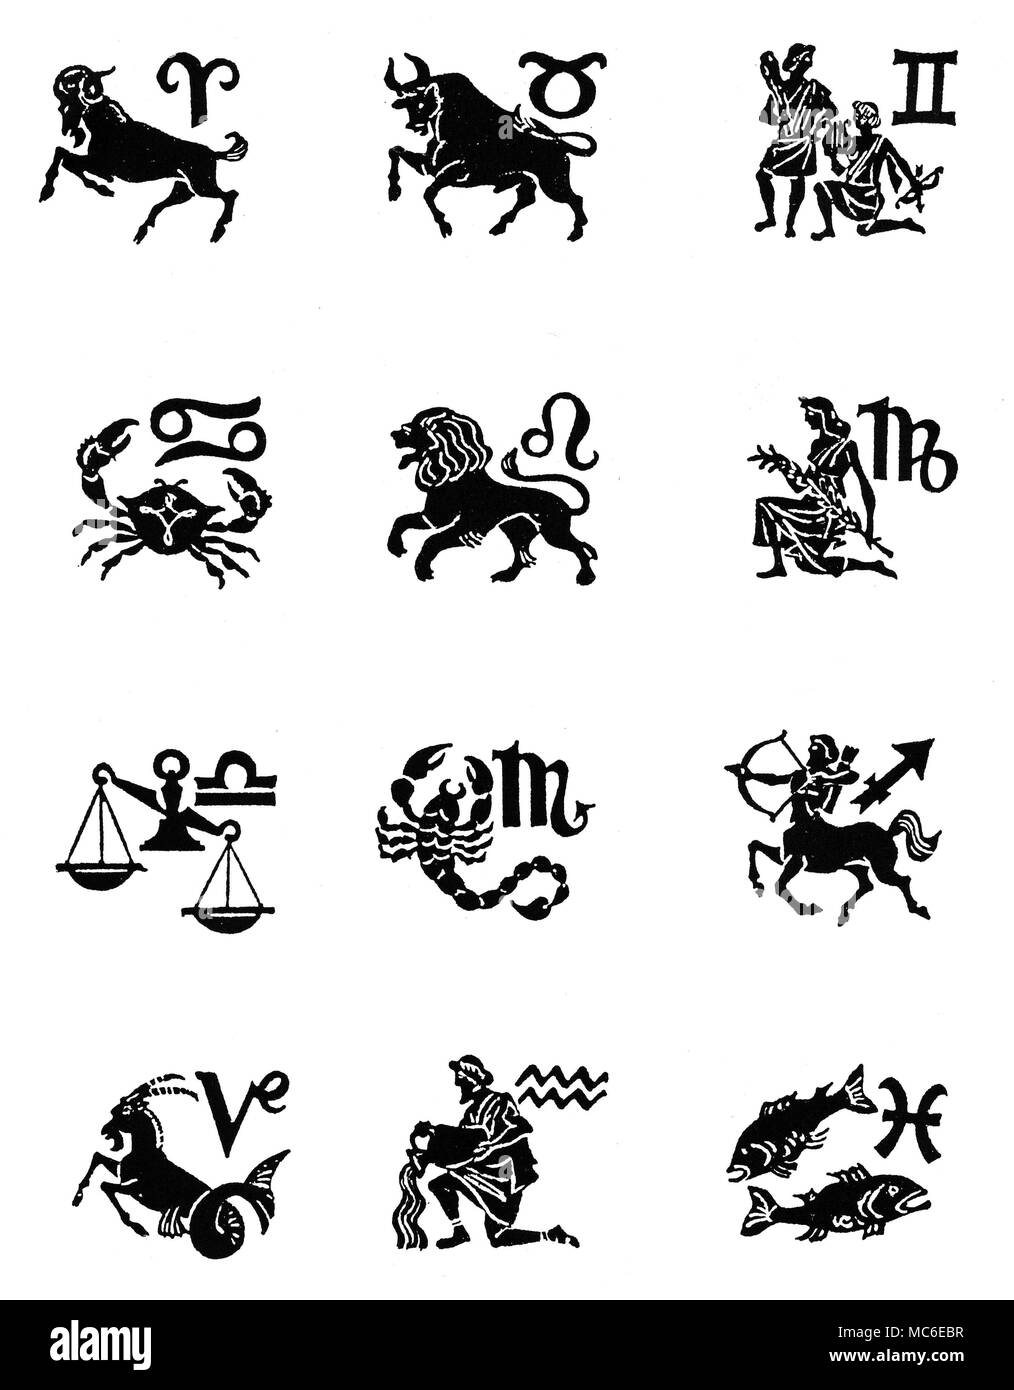 ZODIACS - TWELVE SIGNS Zodiac of twelve images, with corresponding sigils, arranged in four registers (top) Aries, Taurus, Gemini, (second row) Cancer, Leo, Virgo (third row), Libra, Scoprio, Sagittarius, and (fourth row), Capricorn, Aquarius and Pisces. Designed circa 1920. Stock Photo